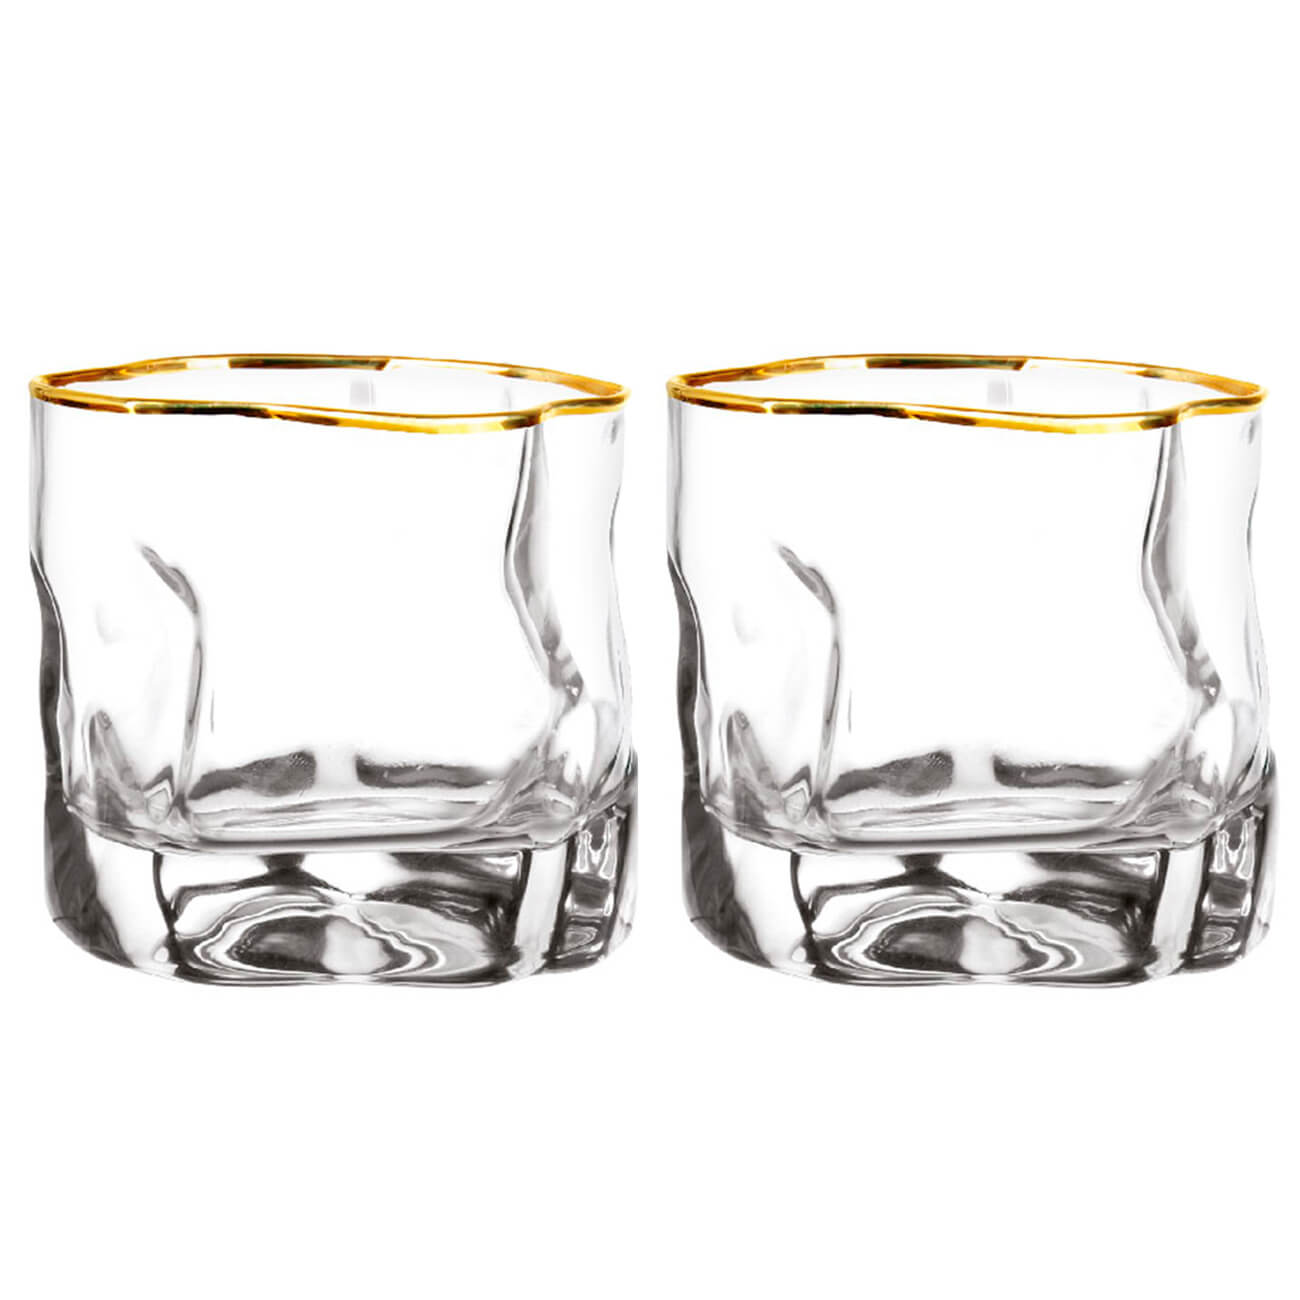 Стакан для виски, 245 мл, 2 шт, стекло, с золотистым кантом, Slalom gold ametista бокалы для виски 6 шт